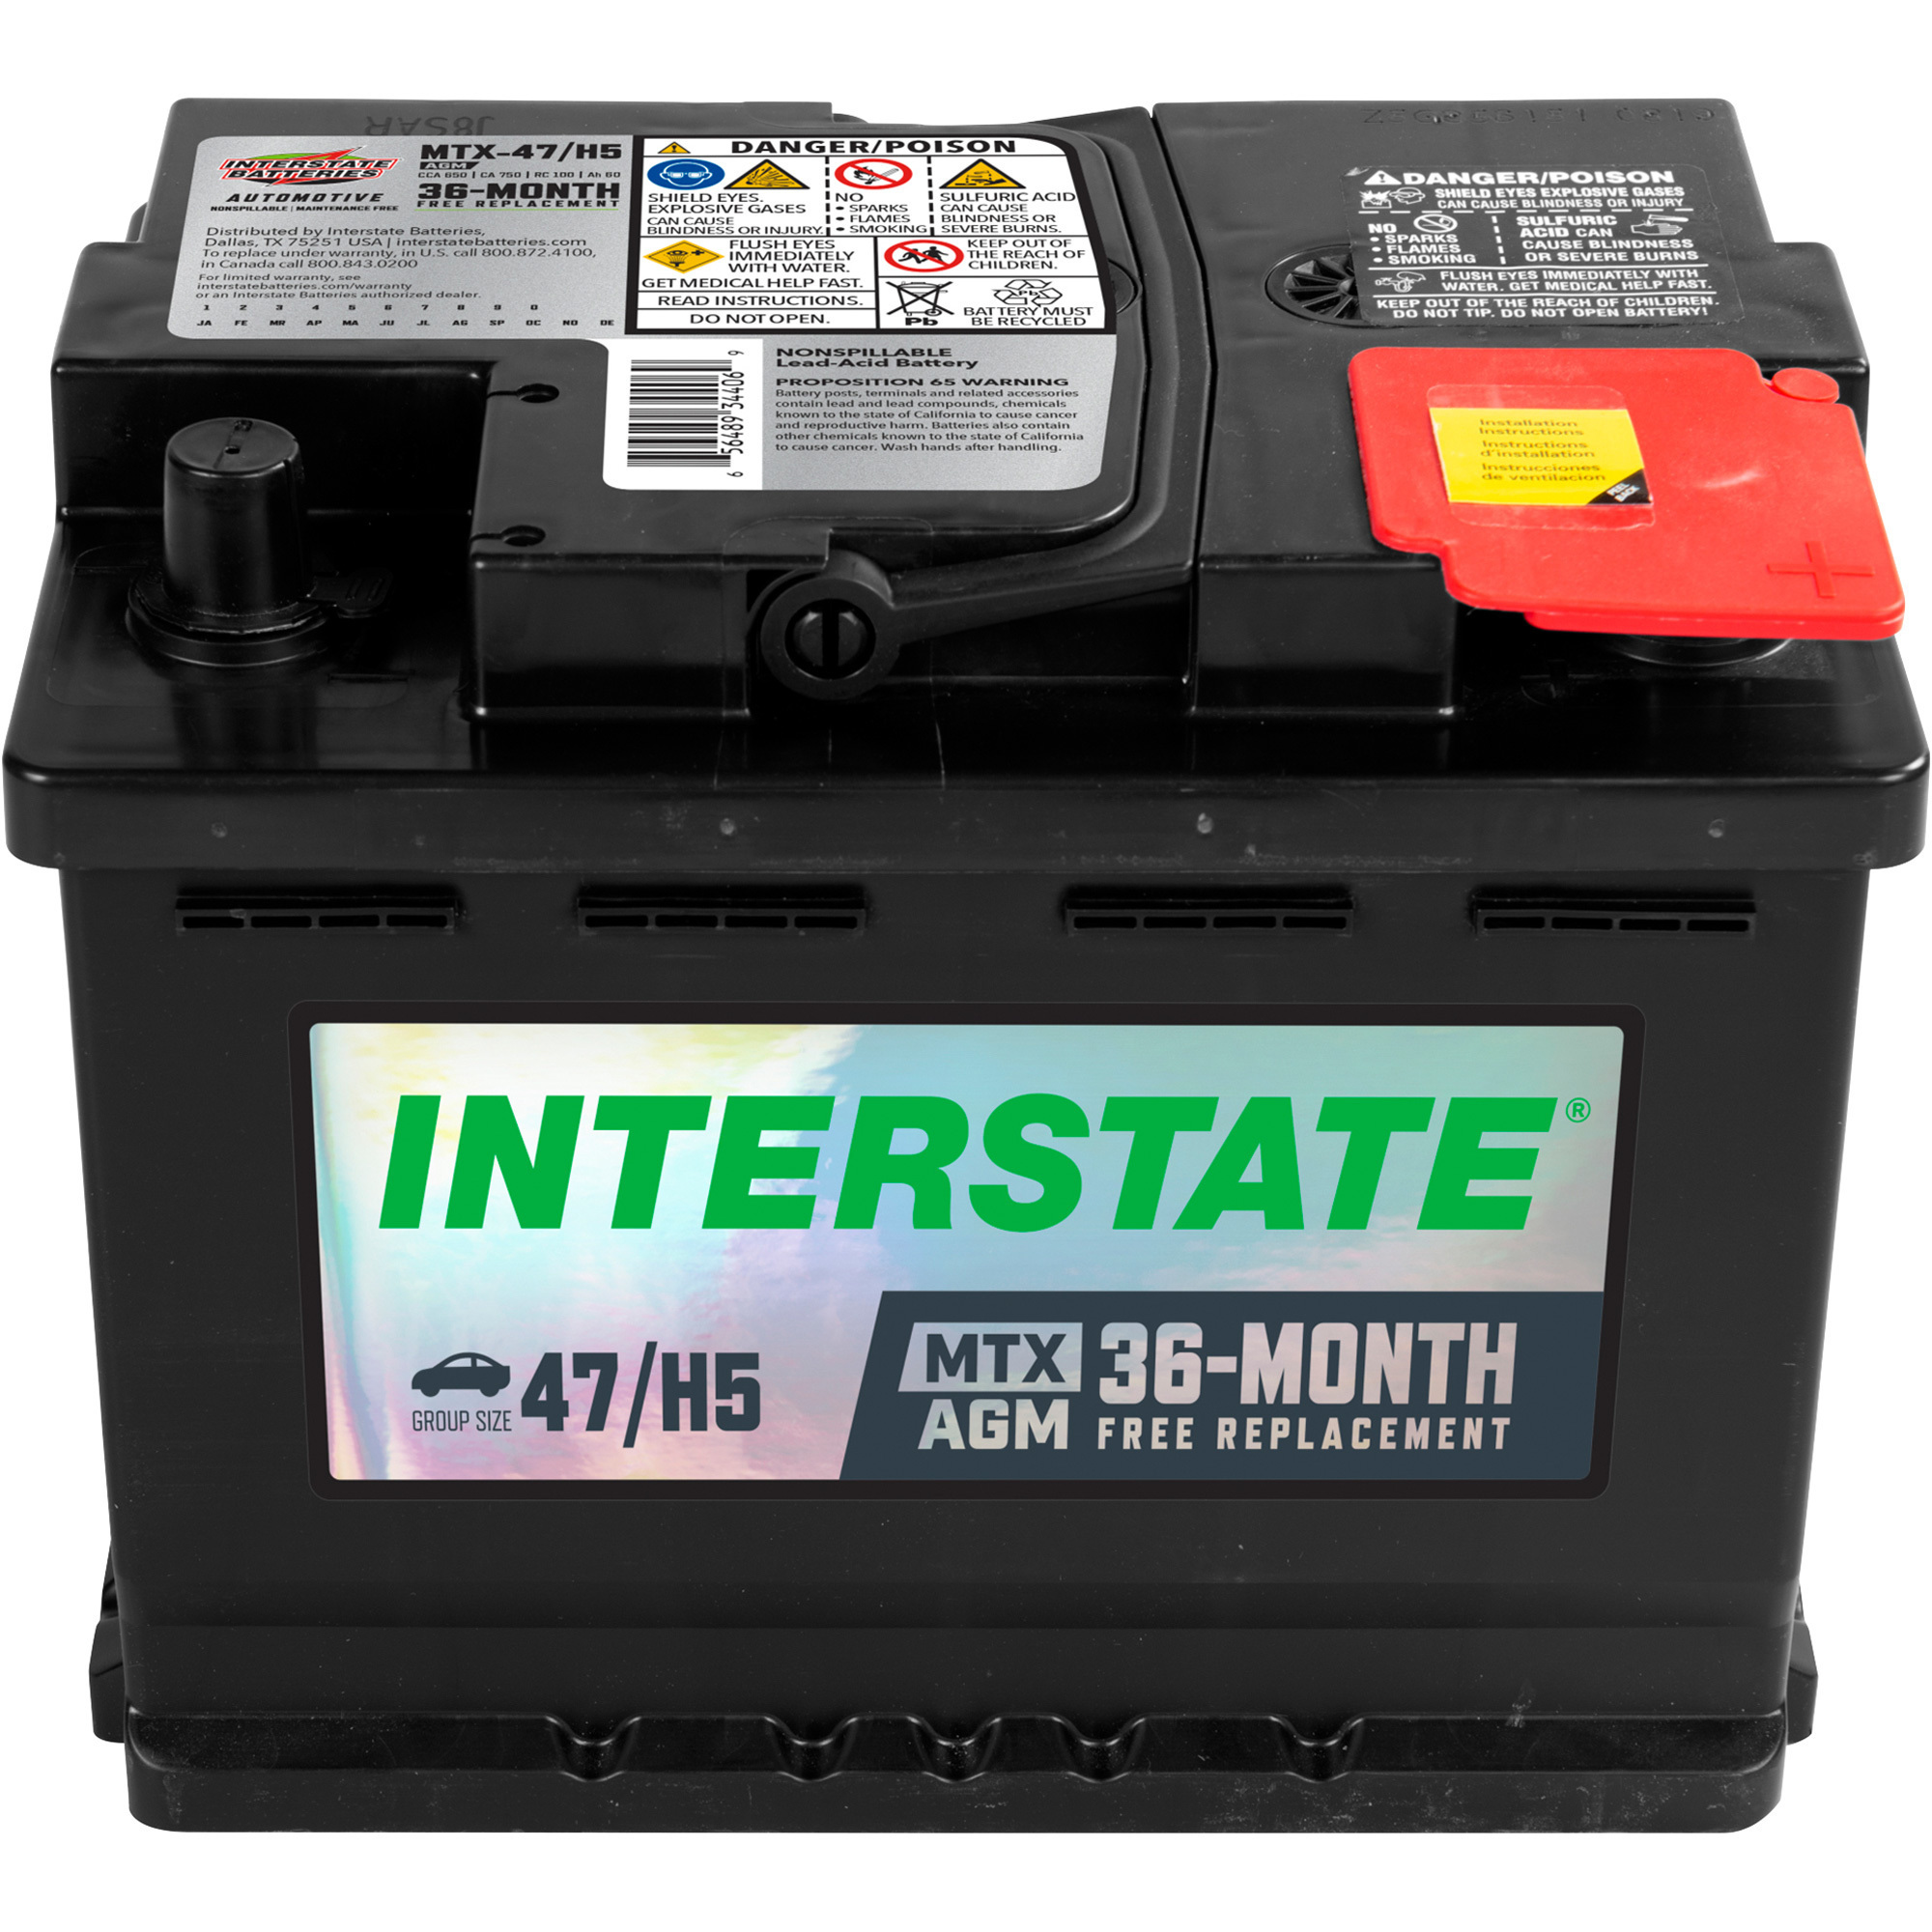 Interstate MTX Series Automotive Battery â Group Size H5, 12 Volt, 650 CCA, Absorbed Glass Mat, Model MTX-47/H5